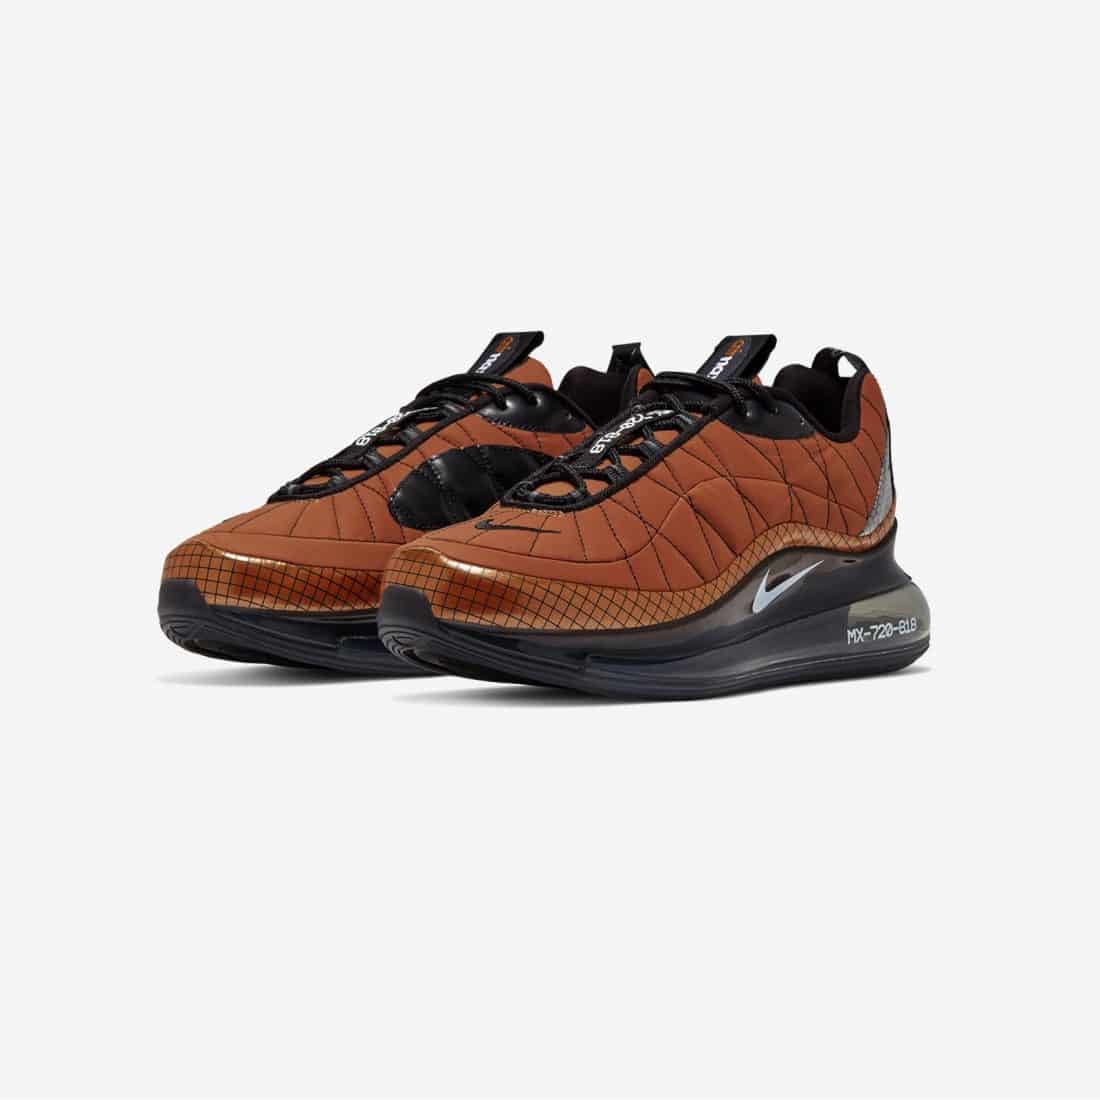 Nike Air Mx 720-818 Metallic Copper - Le Site de la Sneaker